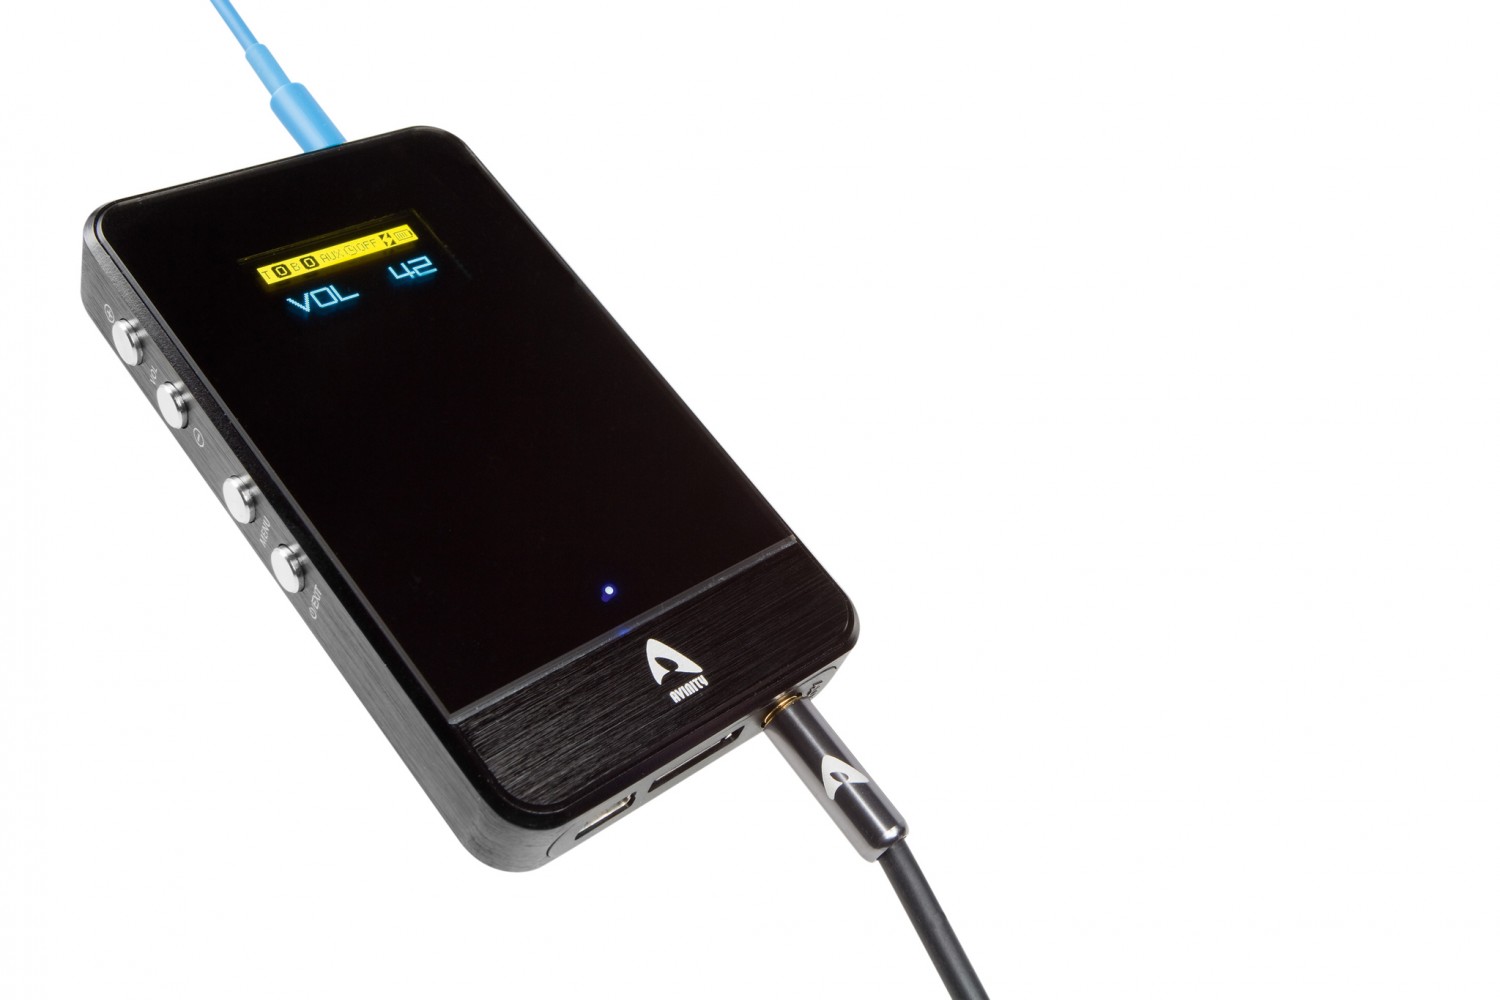 Kopfhörerverstärker Avinity USB DAC Mobile im Test, Bild 1